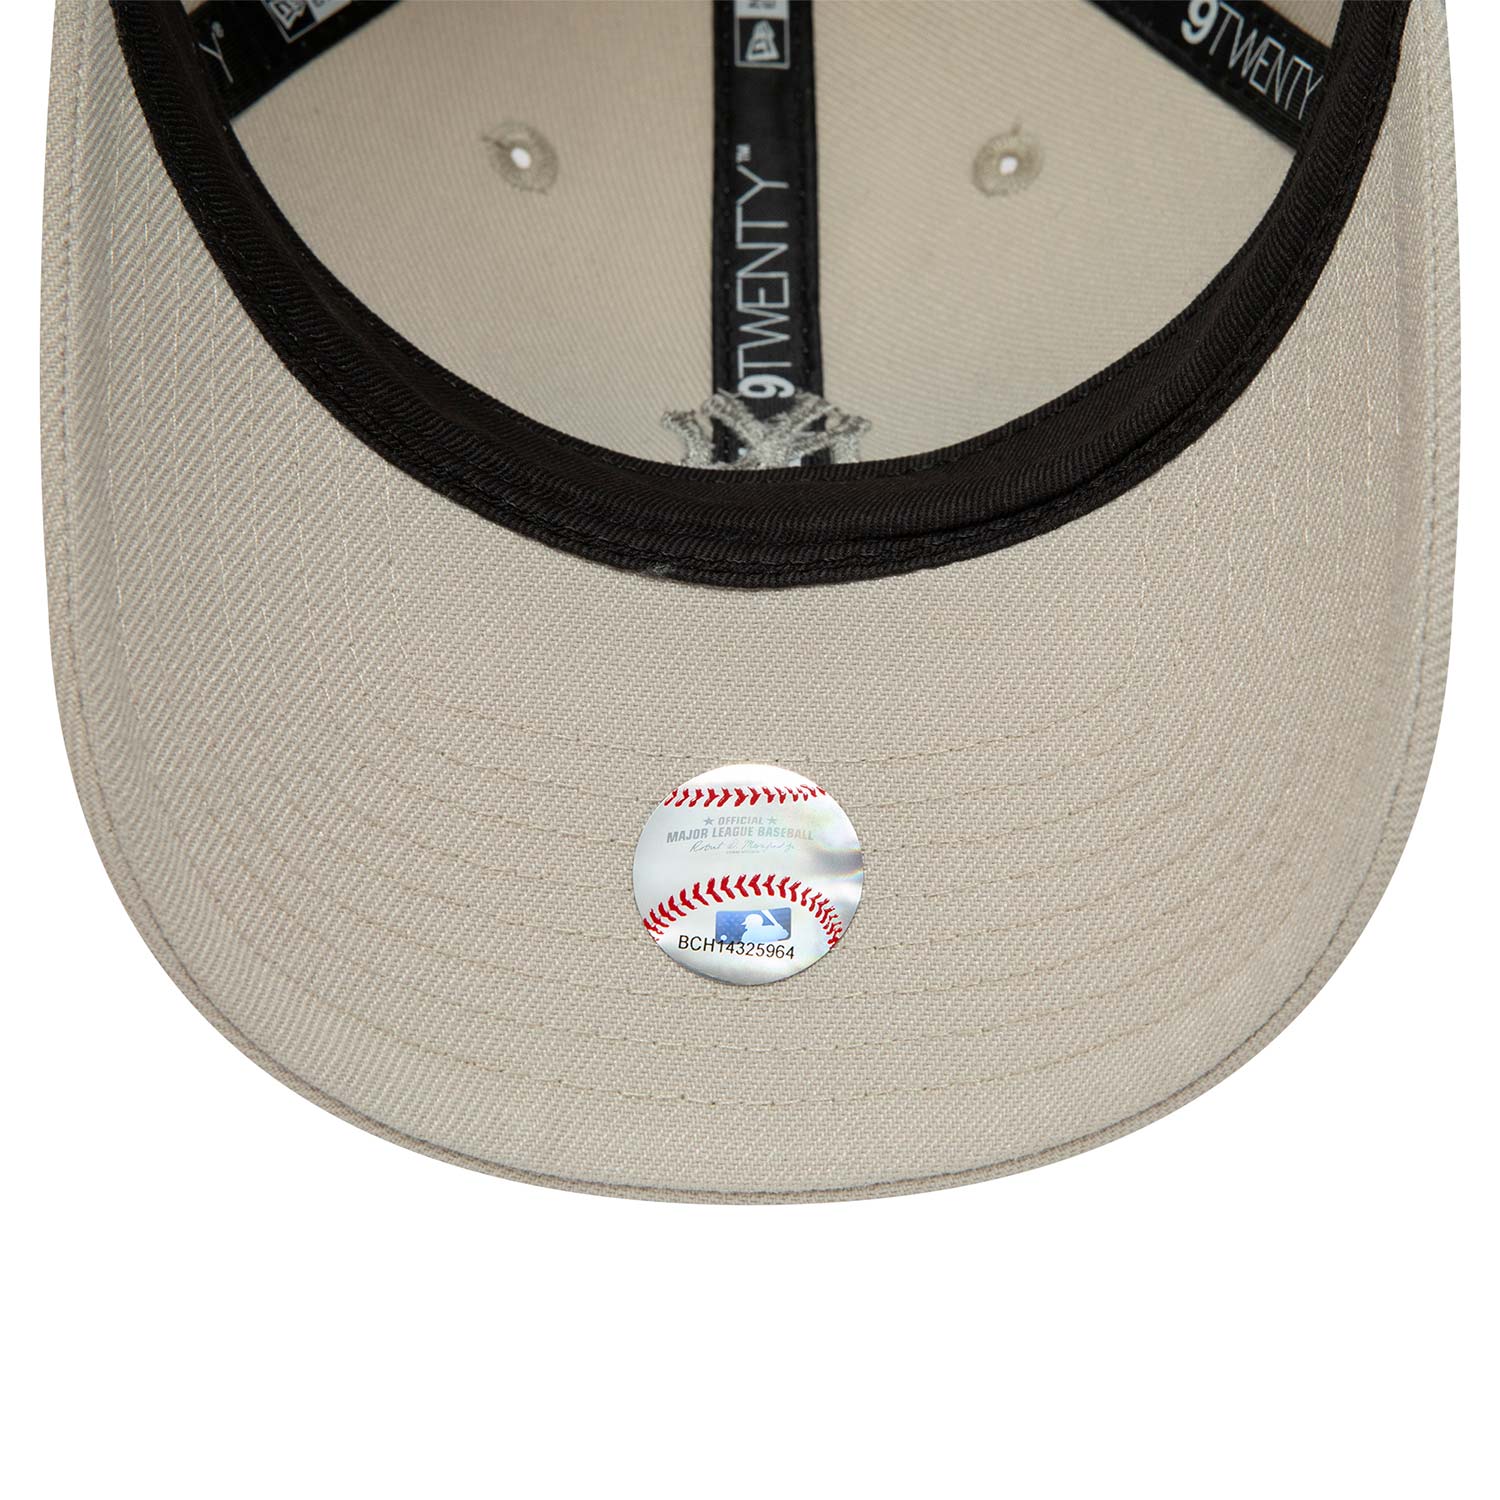 New York Yankees Mini Logo 9TWENTY Adjustable Cap